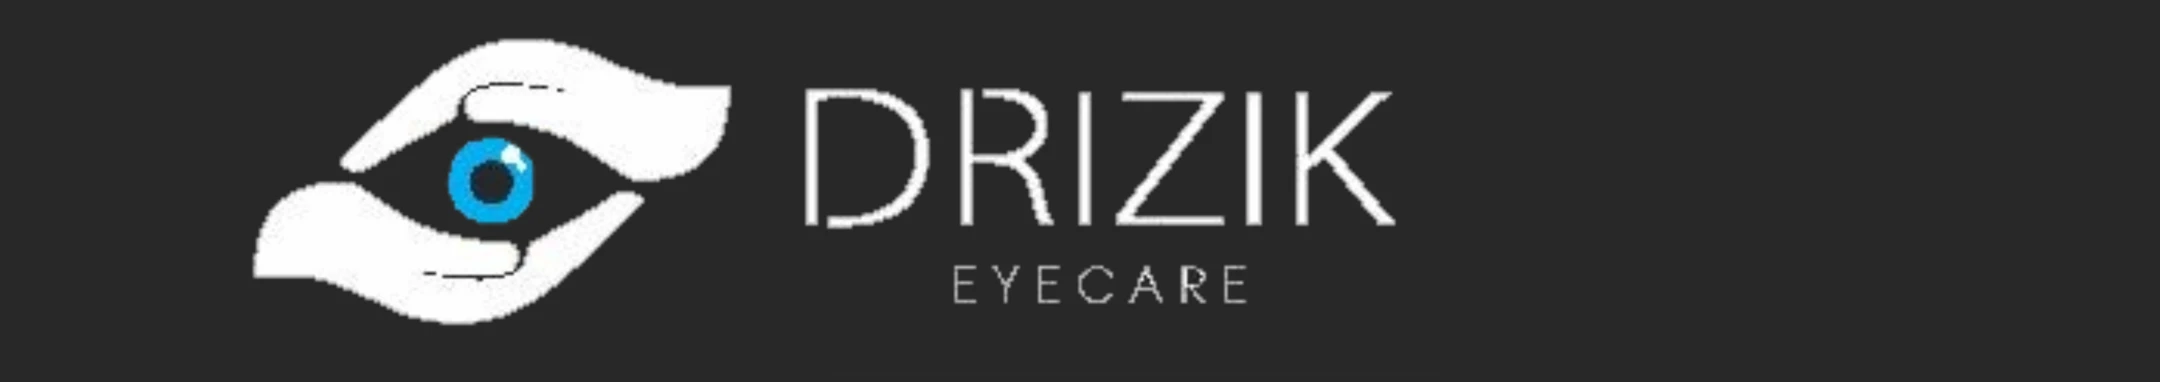 Drizik Eyecare, Medford, MA